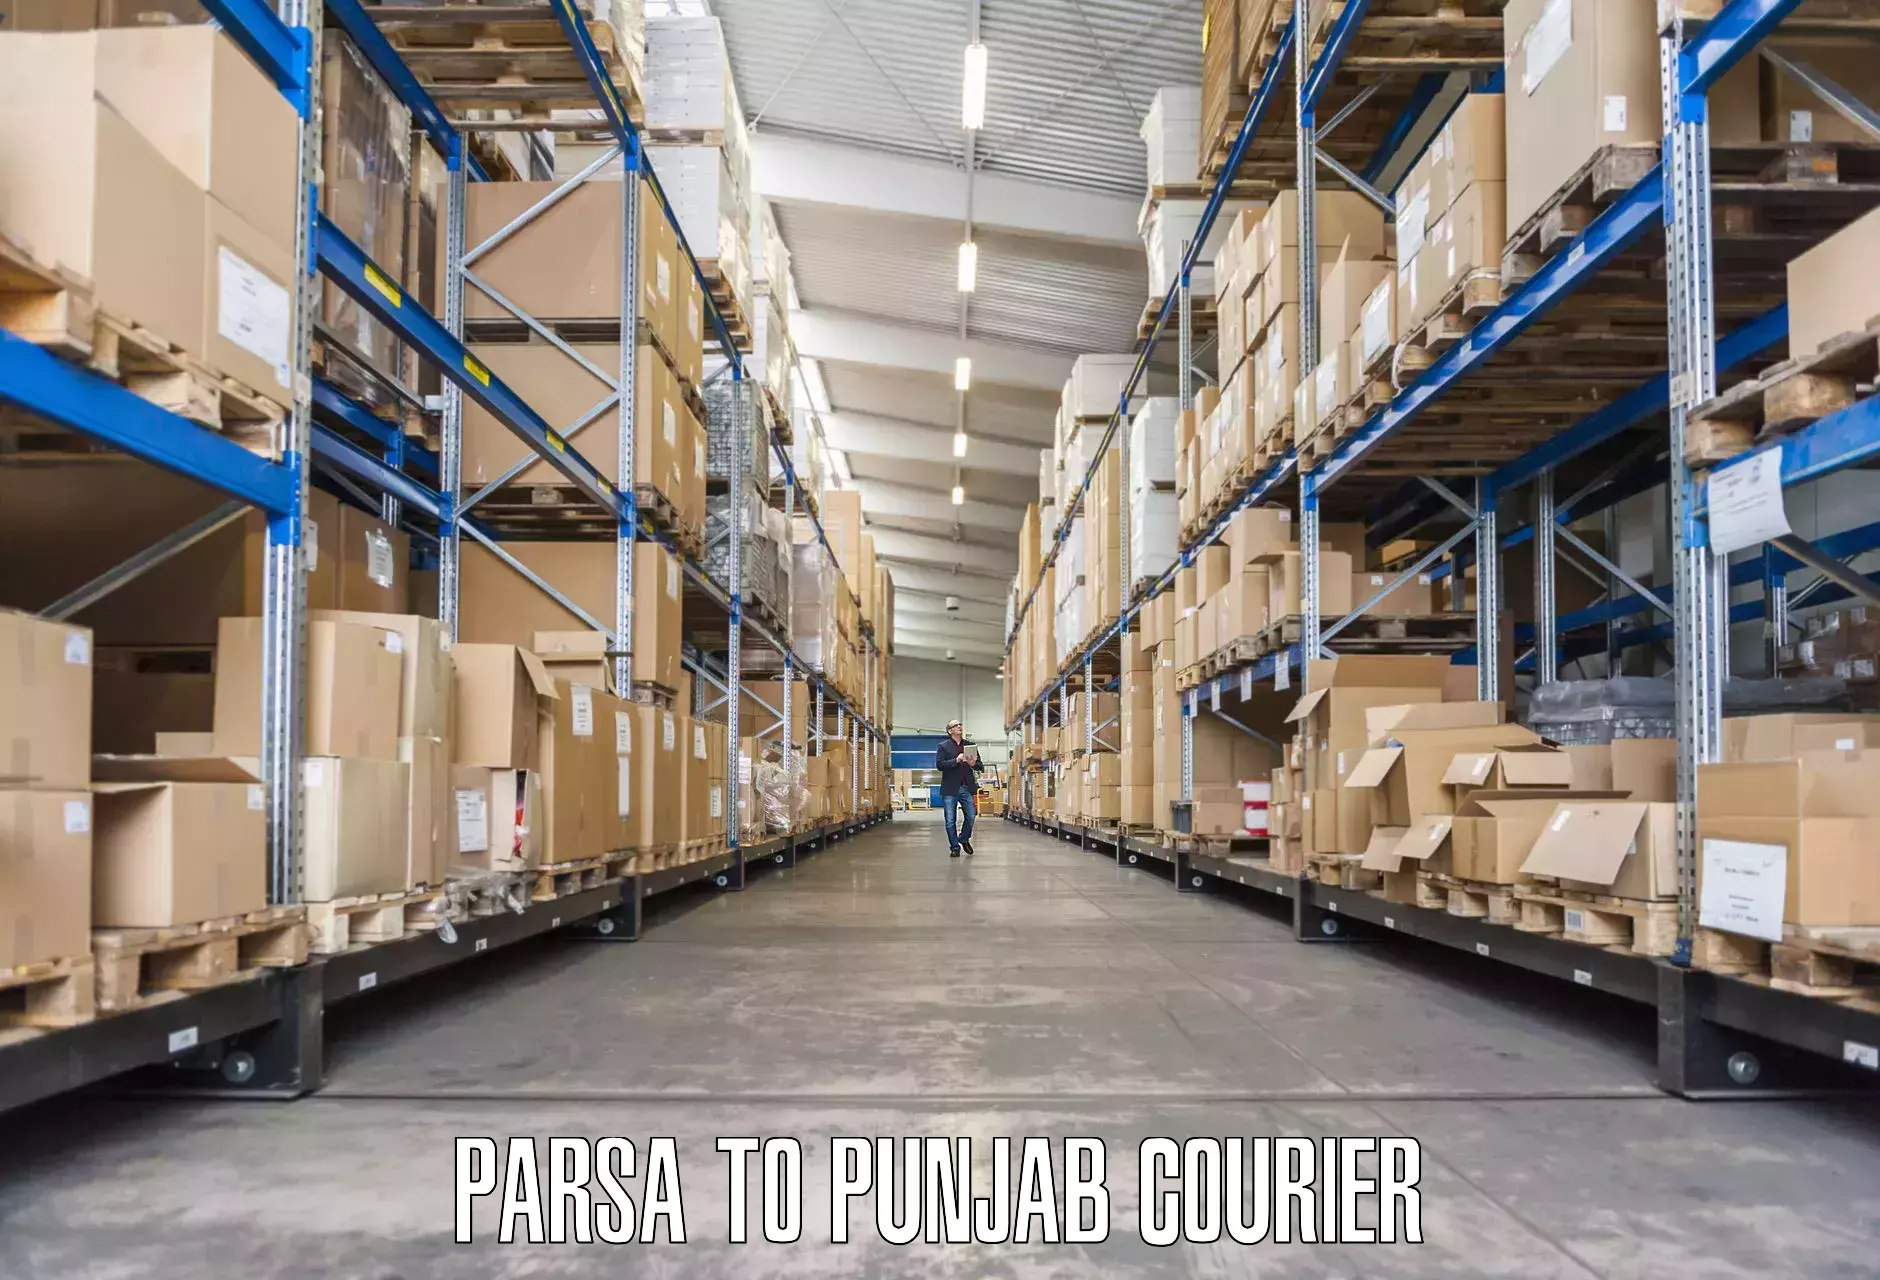 Furniture delivery service Parsa to Punjab